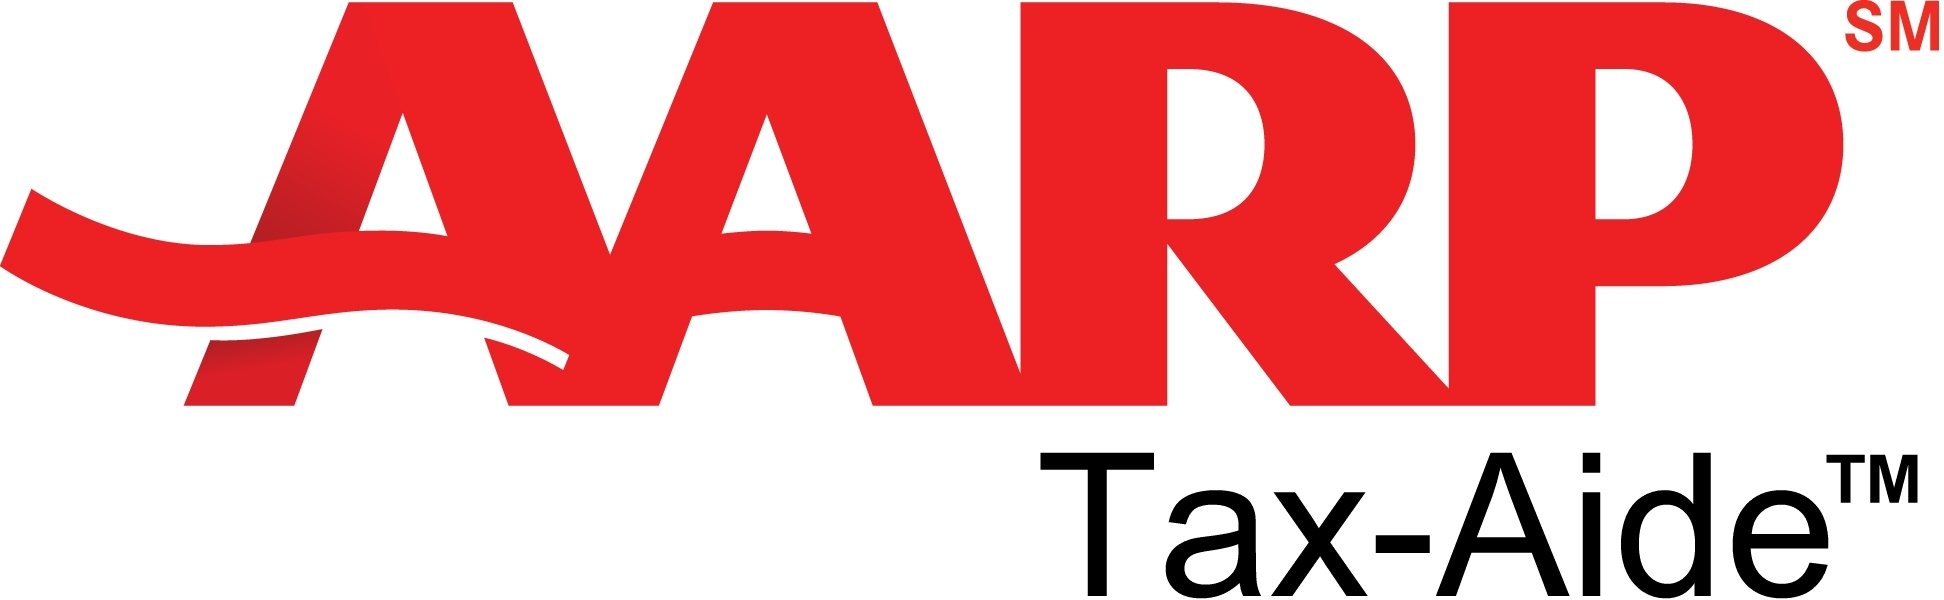 AARP Foundation Tax-Aide Program